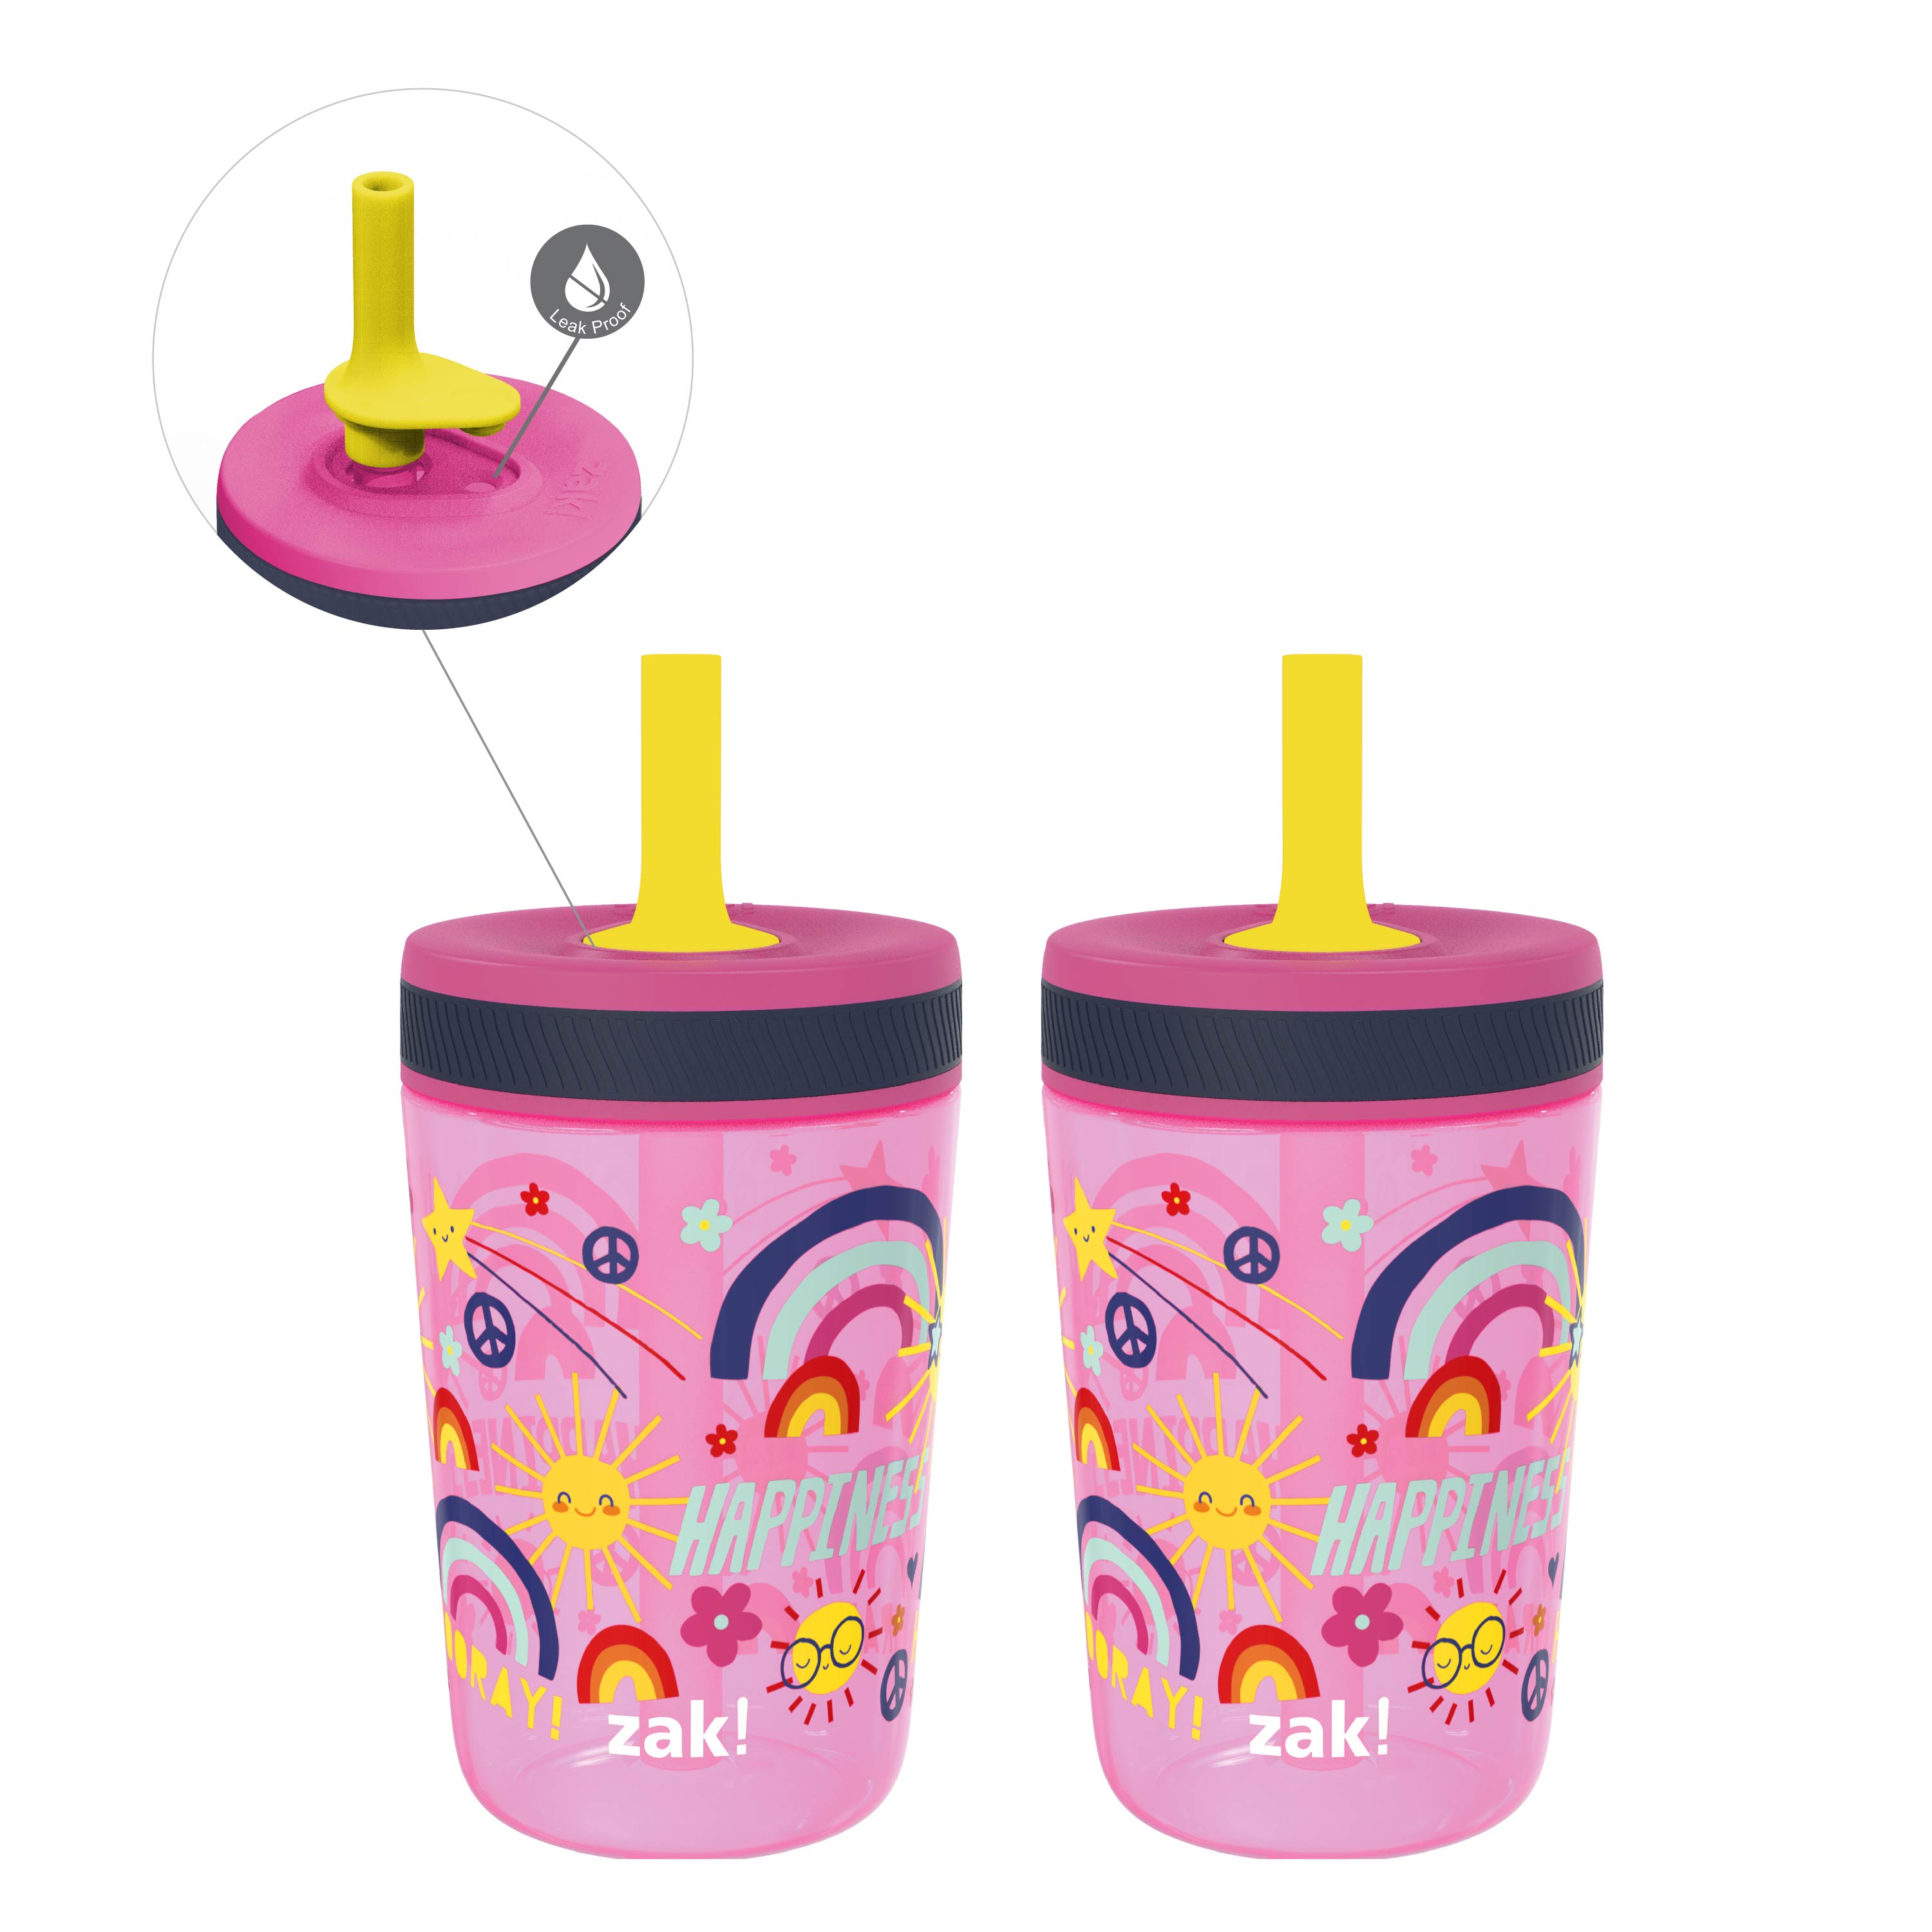 Sip-N-Snack (2 Pack) 2-in-1 Kids Cups BPA-Free With Straws